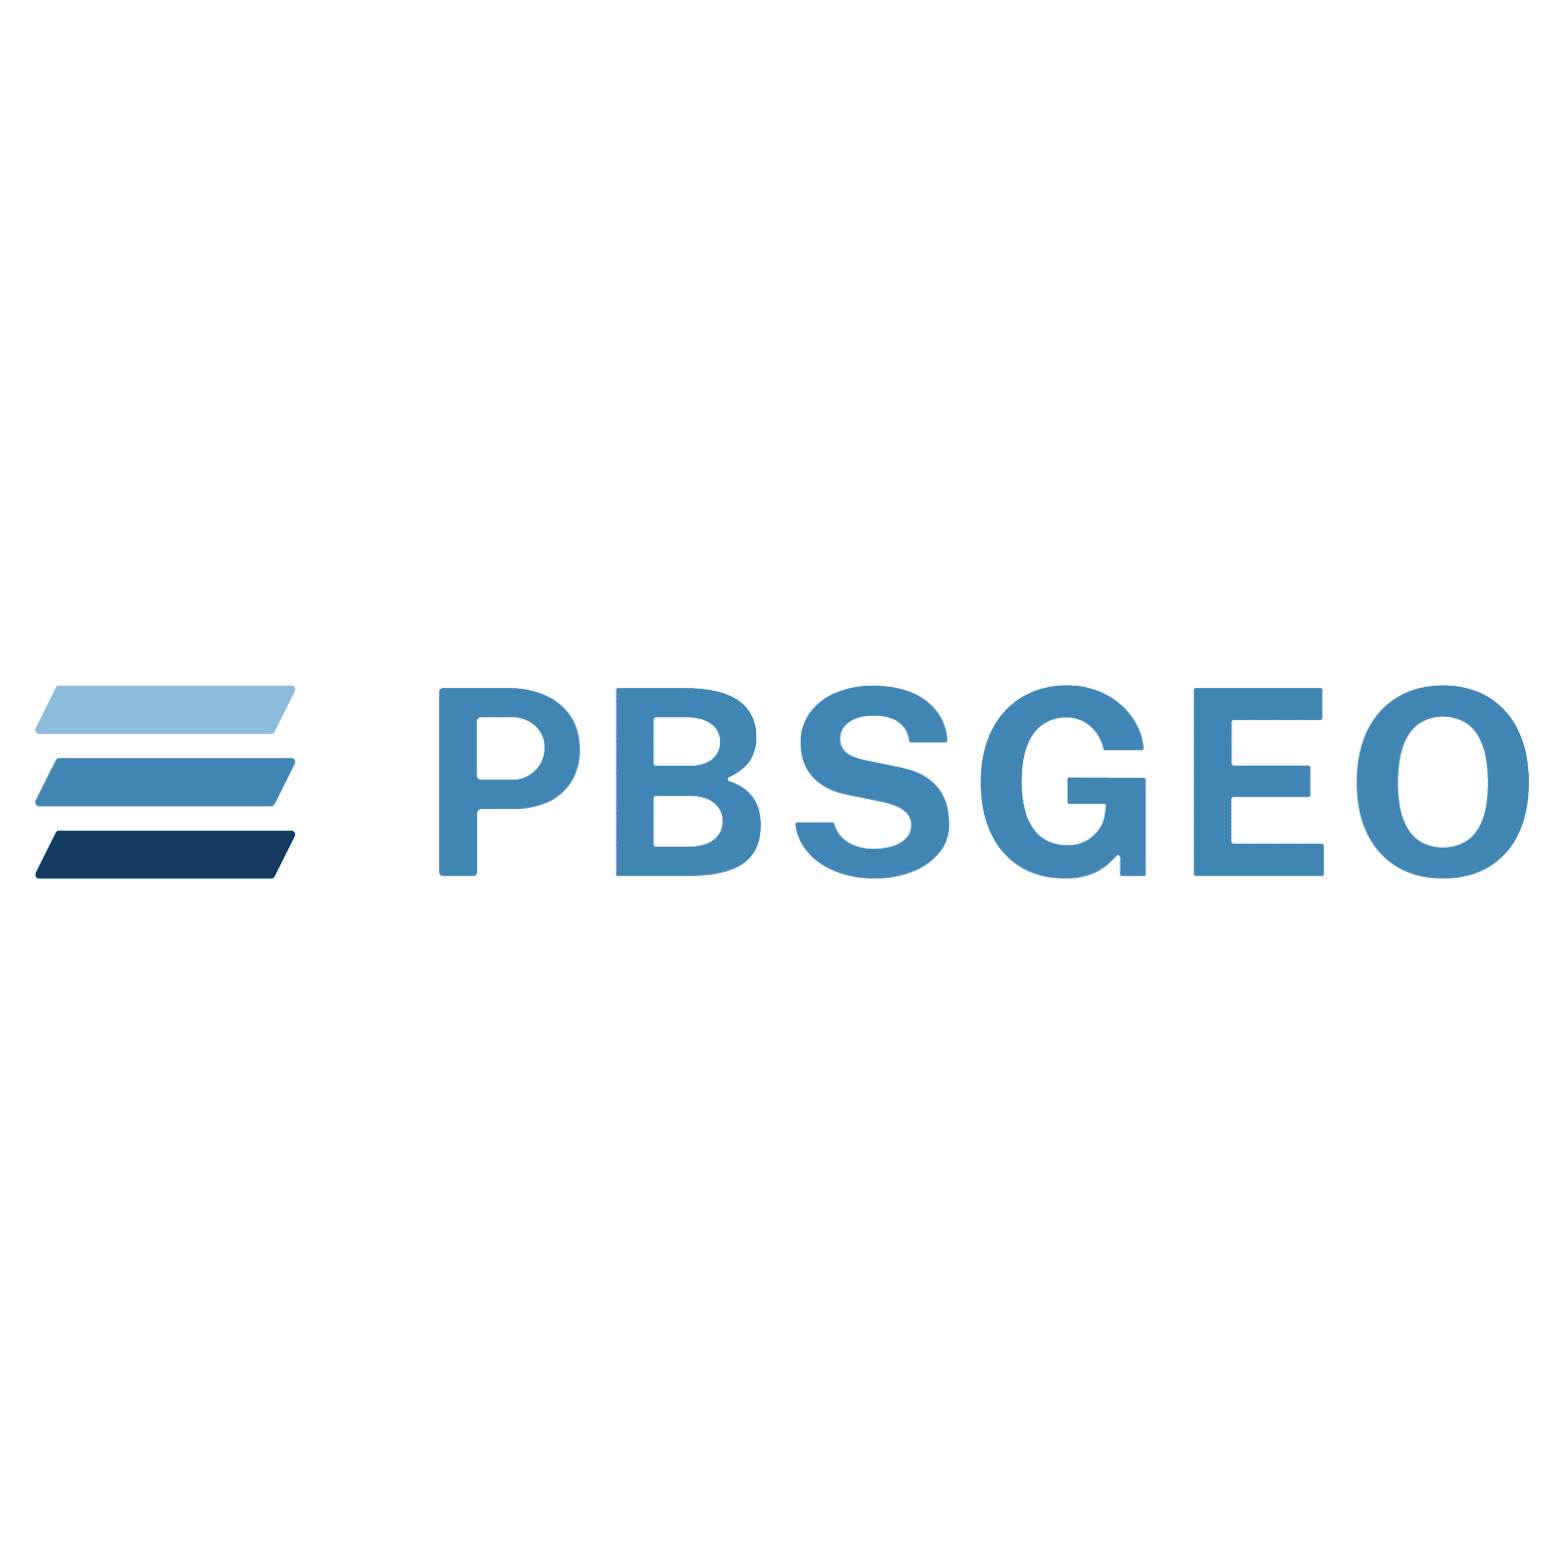 PBS geo